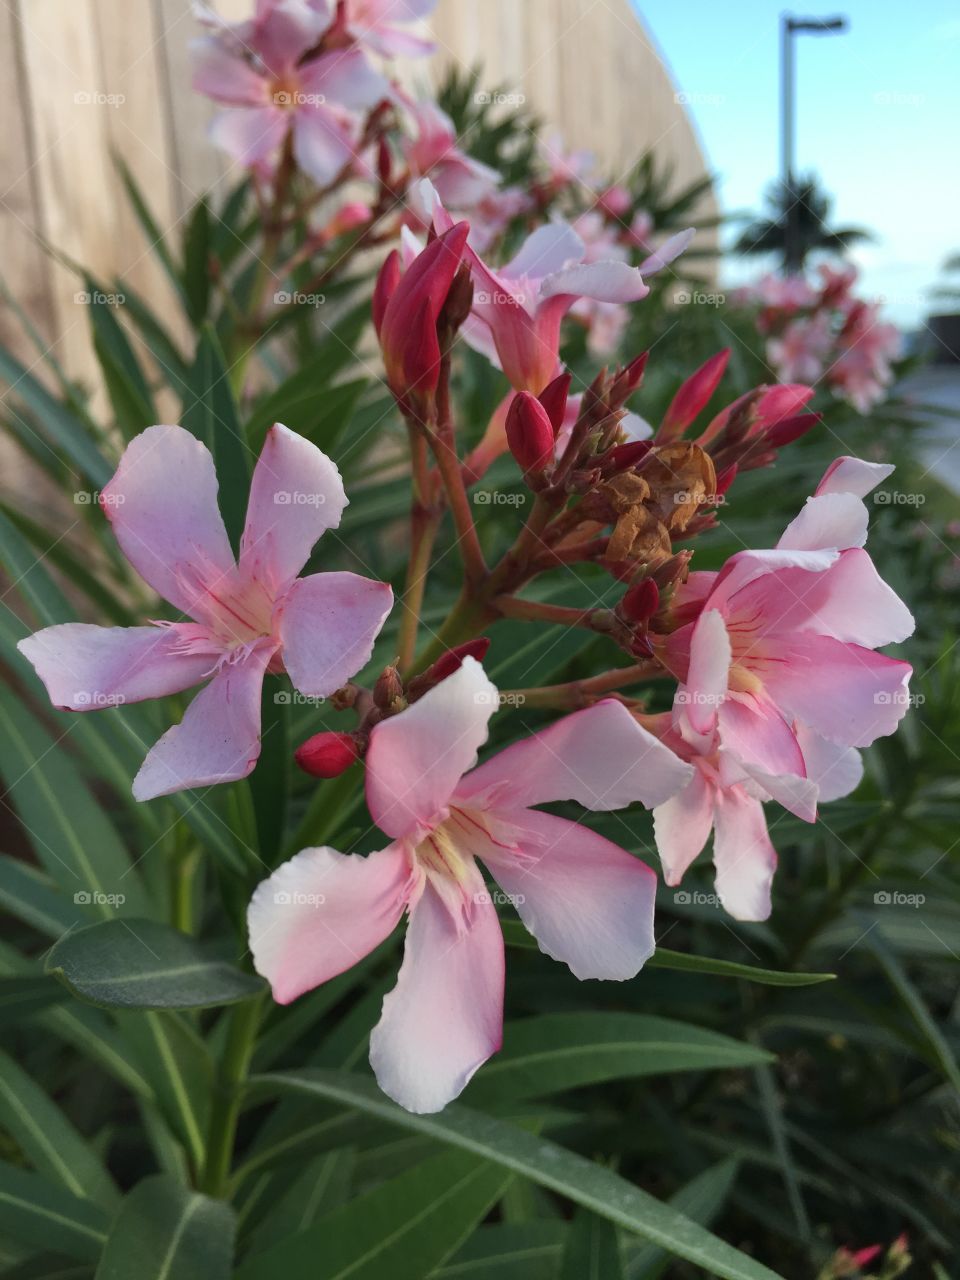 Flowers found in Bimini. Bahamas. 